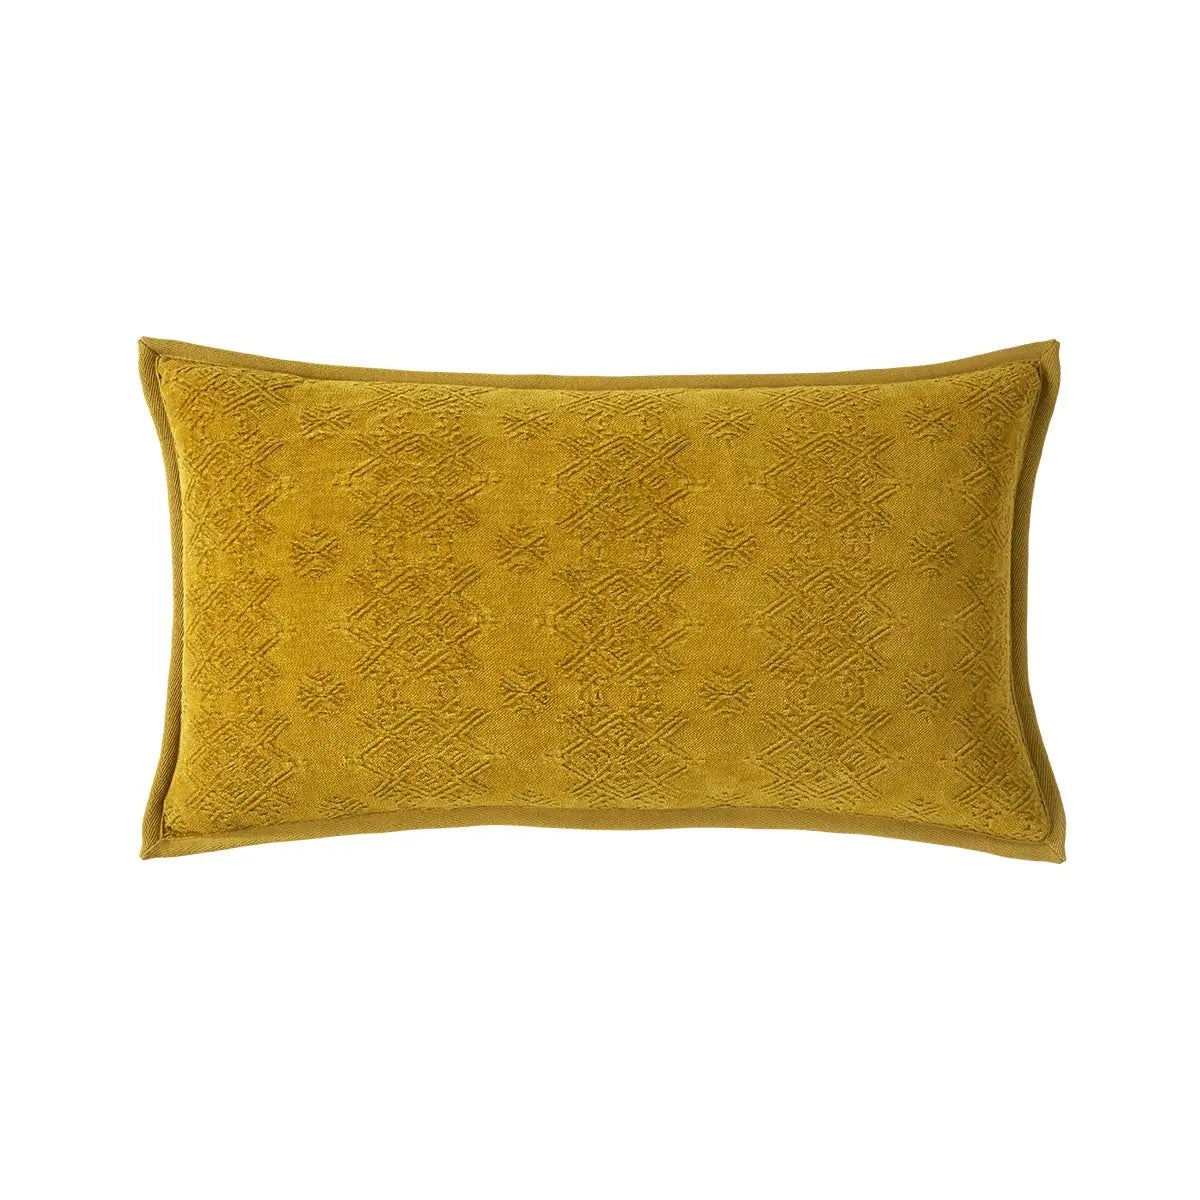 Yves Delorme Syracuse 13x22 Decorative Pillow - Safran